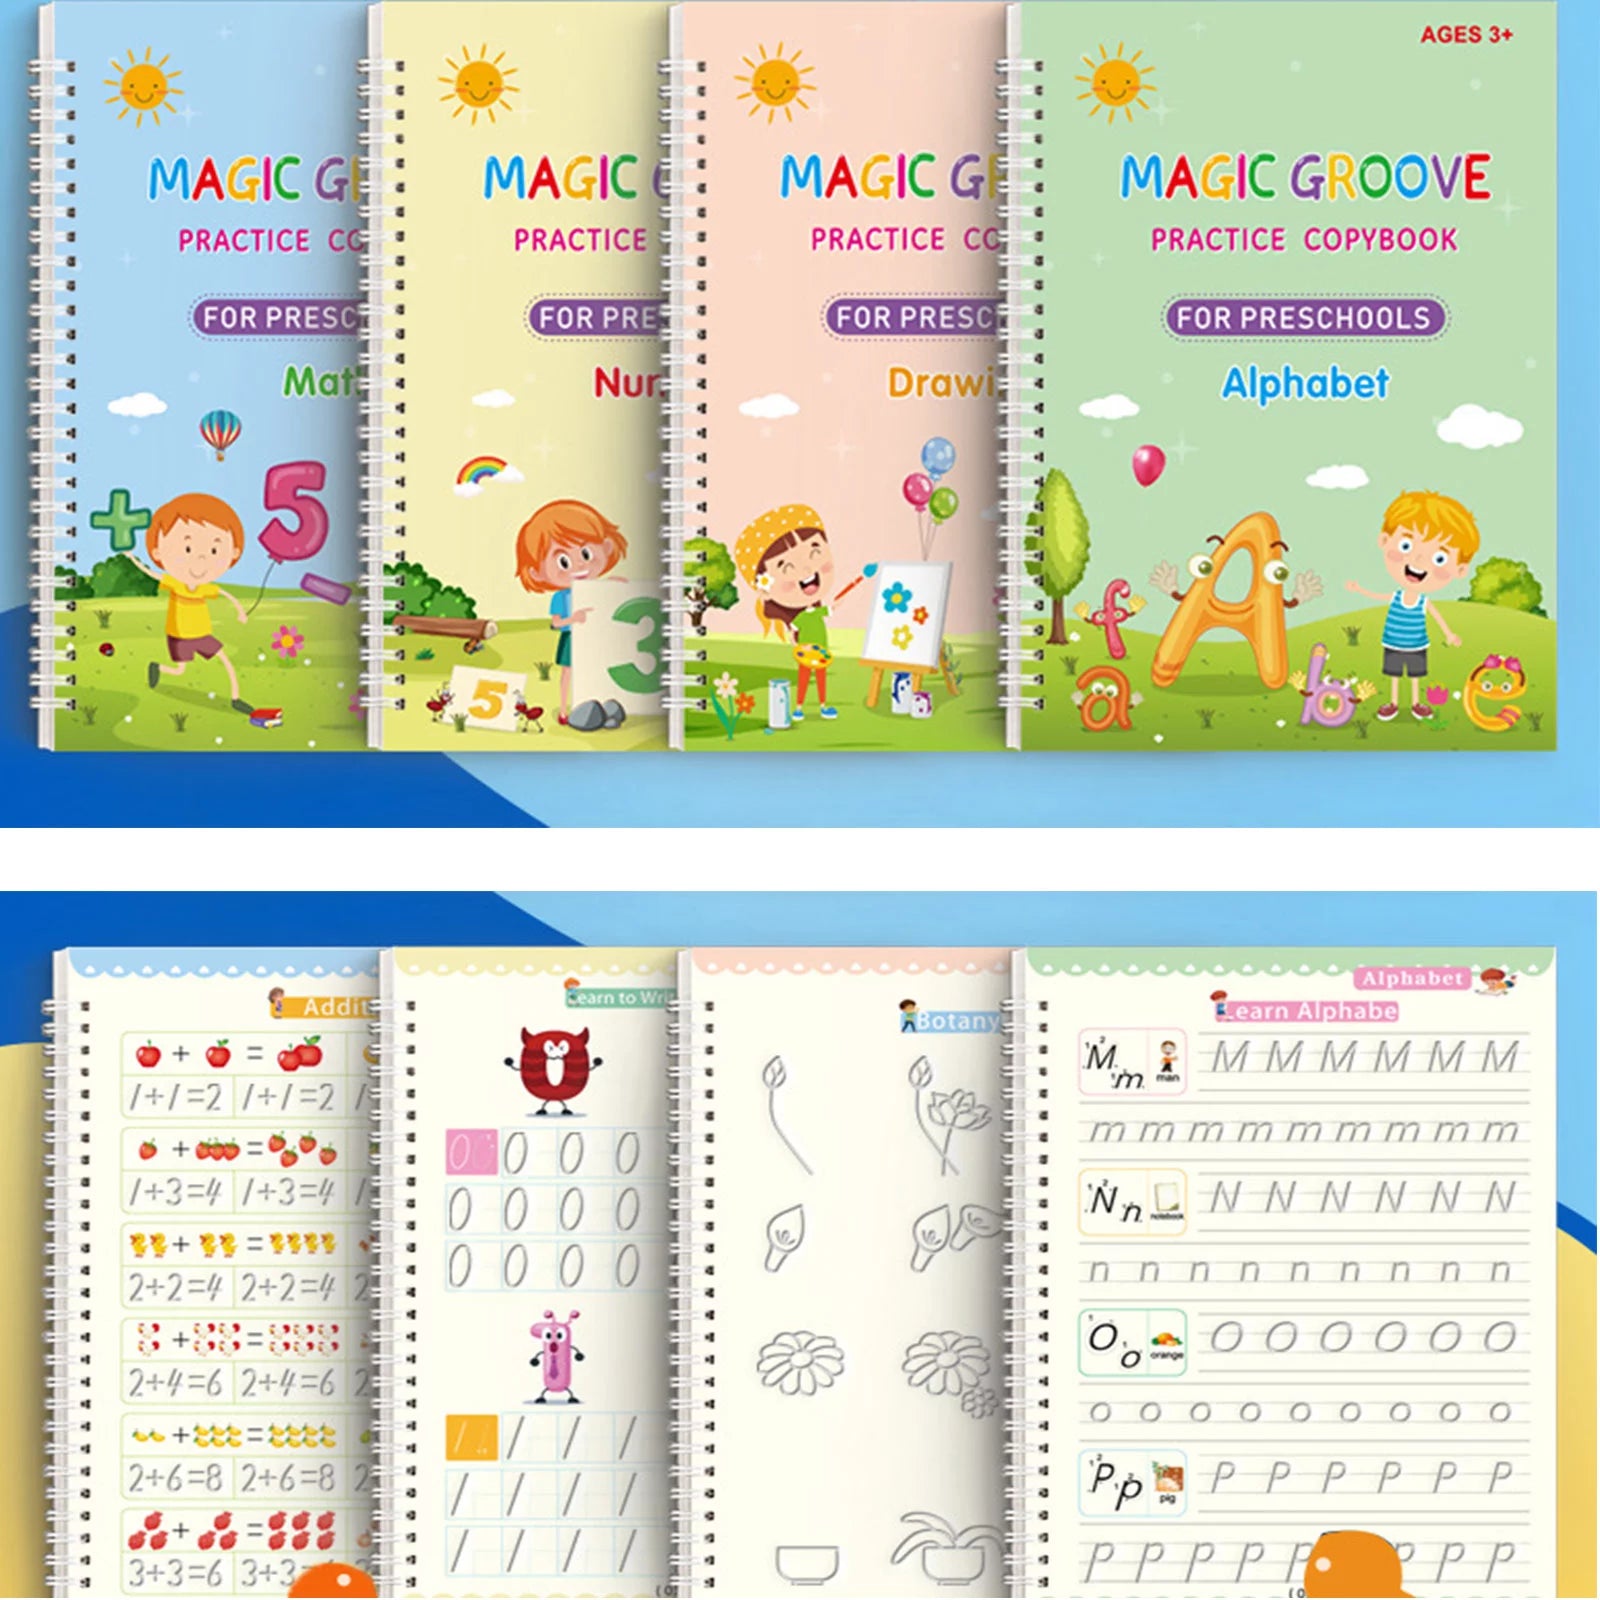 (Pack of 4) Magic Practice Copybook for Kids, Children Reusable Handwriting Practice Copy Books for Preschools Magic Workbook Letter Writing Book